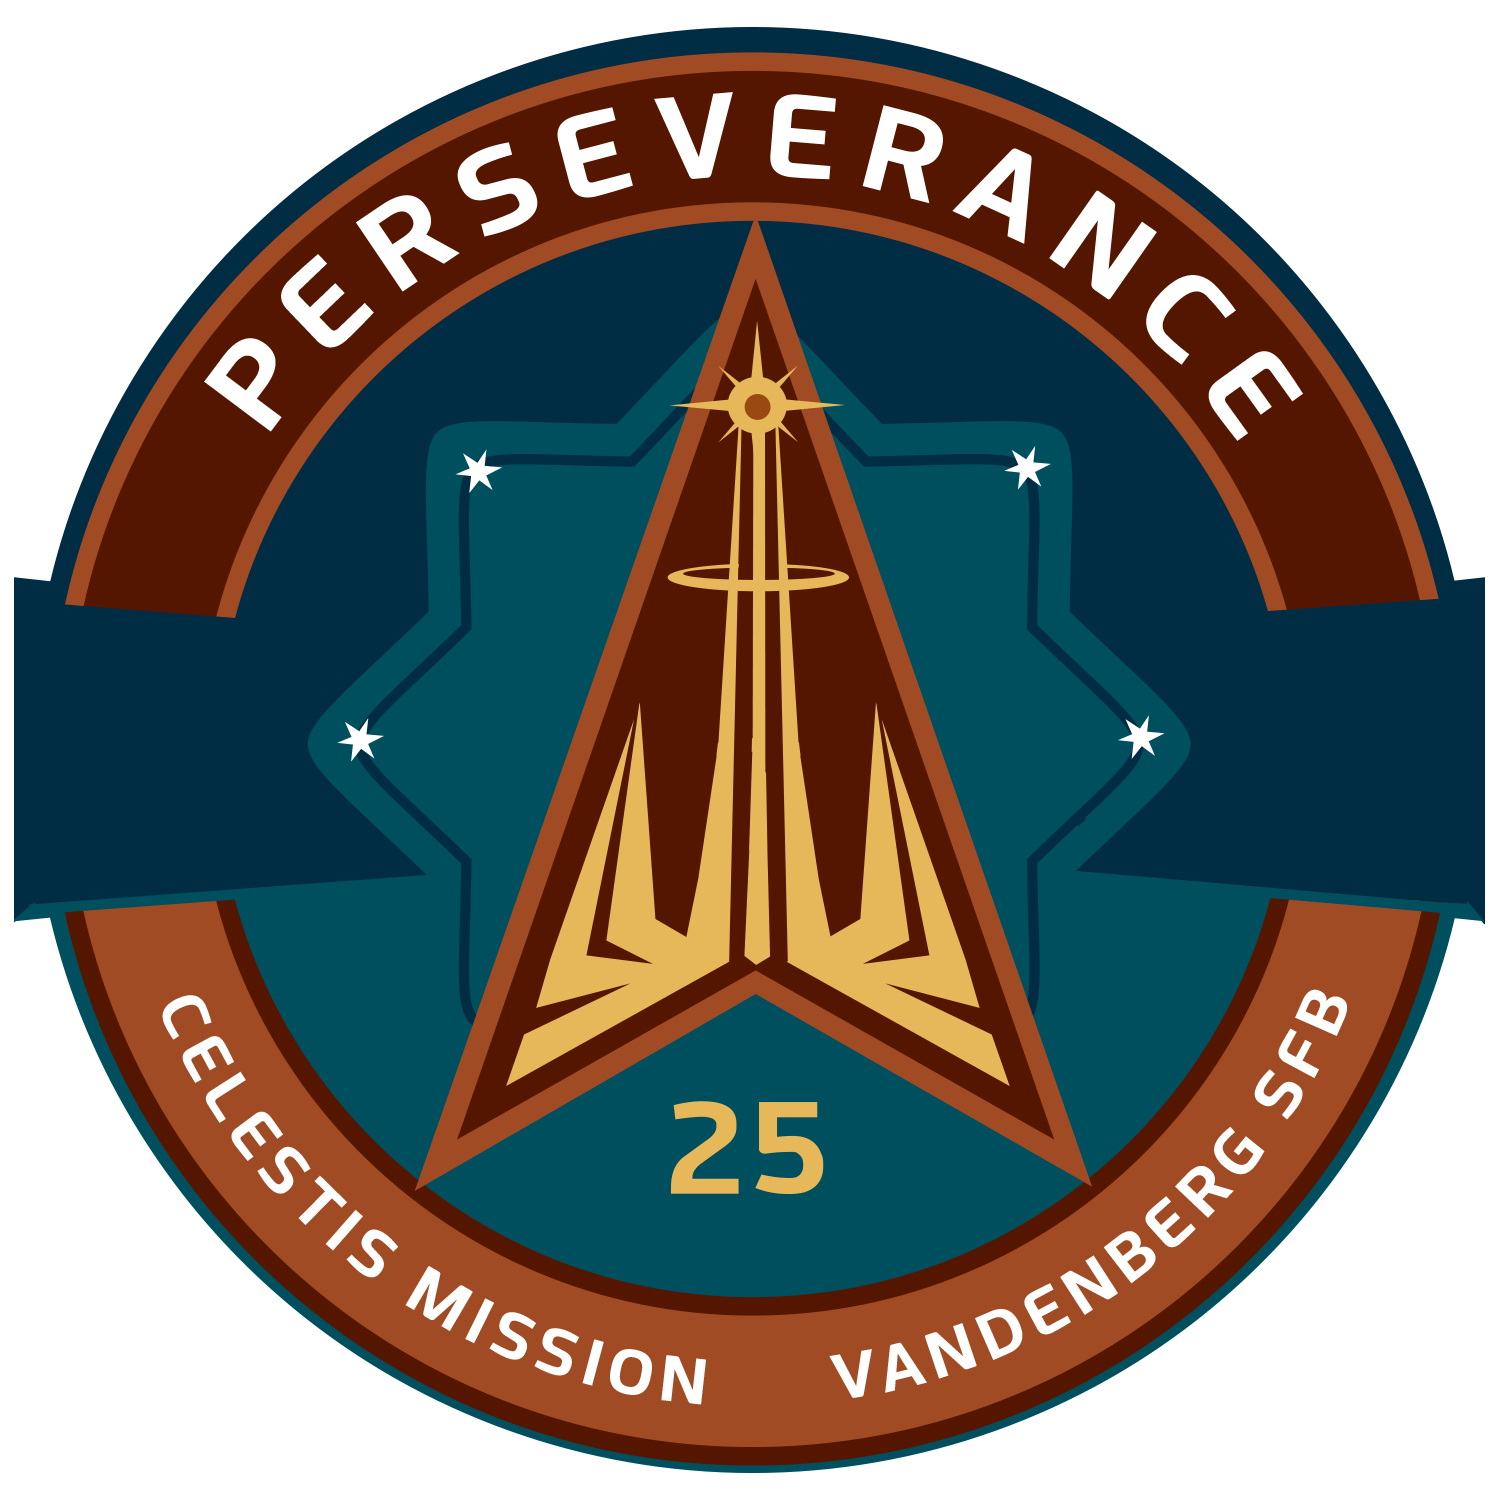 Perseverance_C25-nb.png